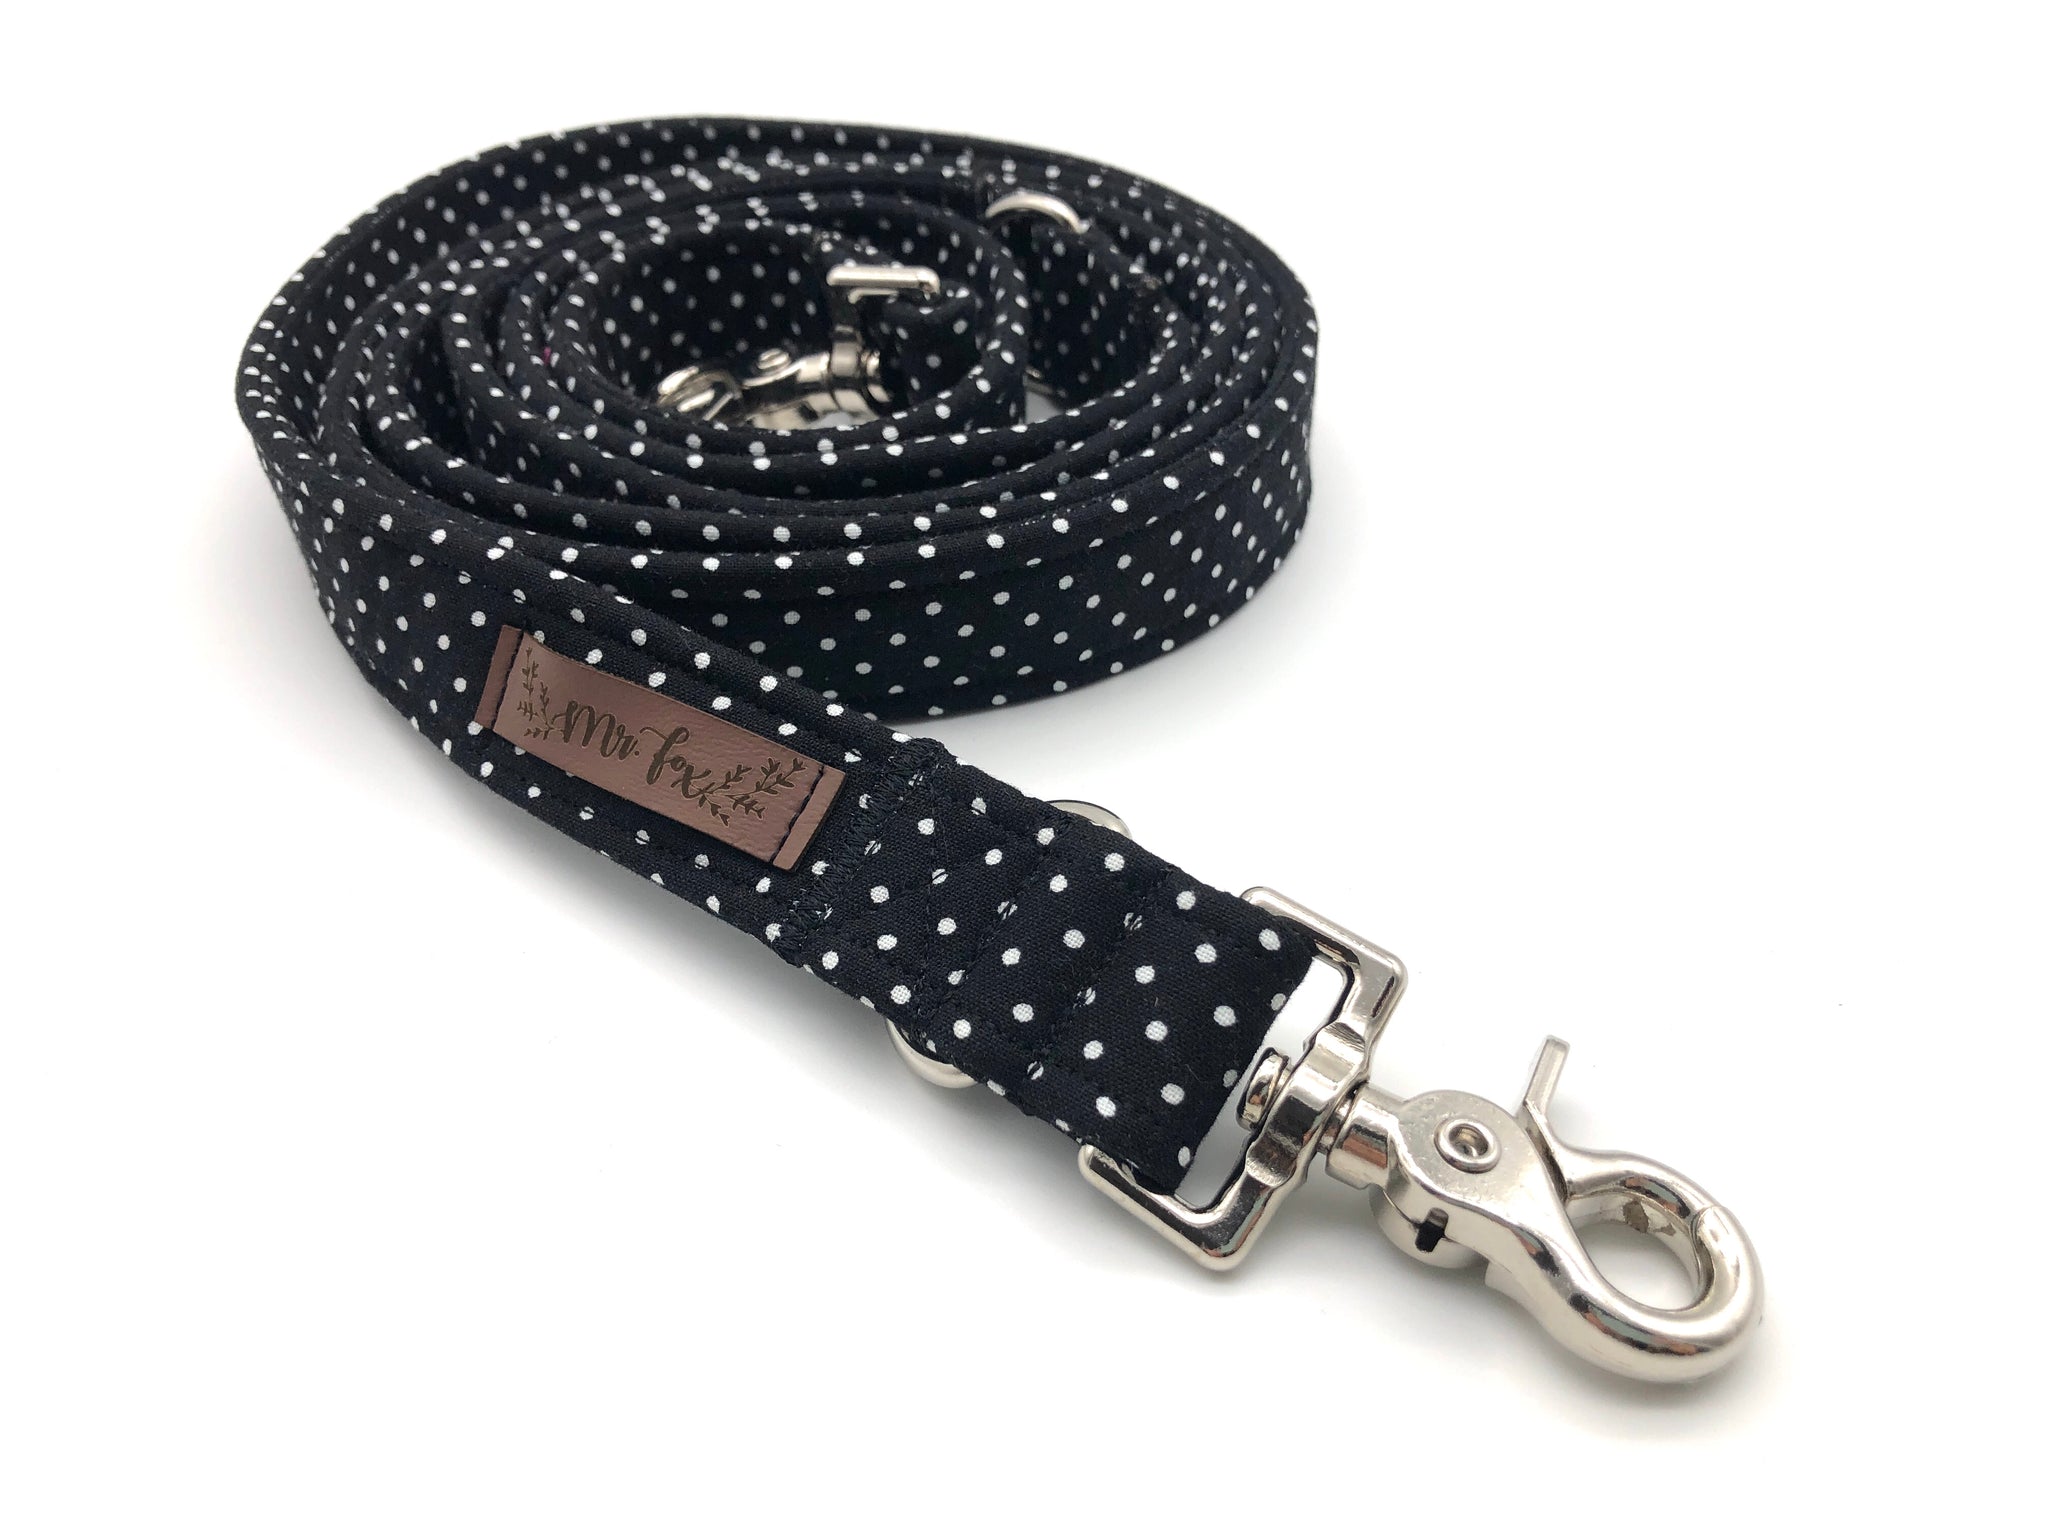 "Black Polkadot" dog leash